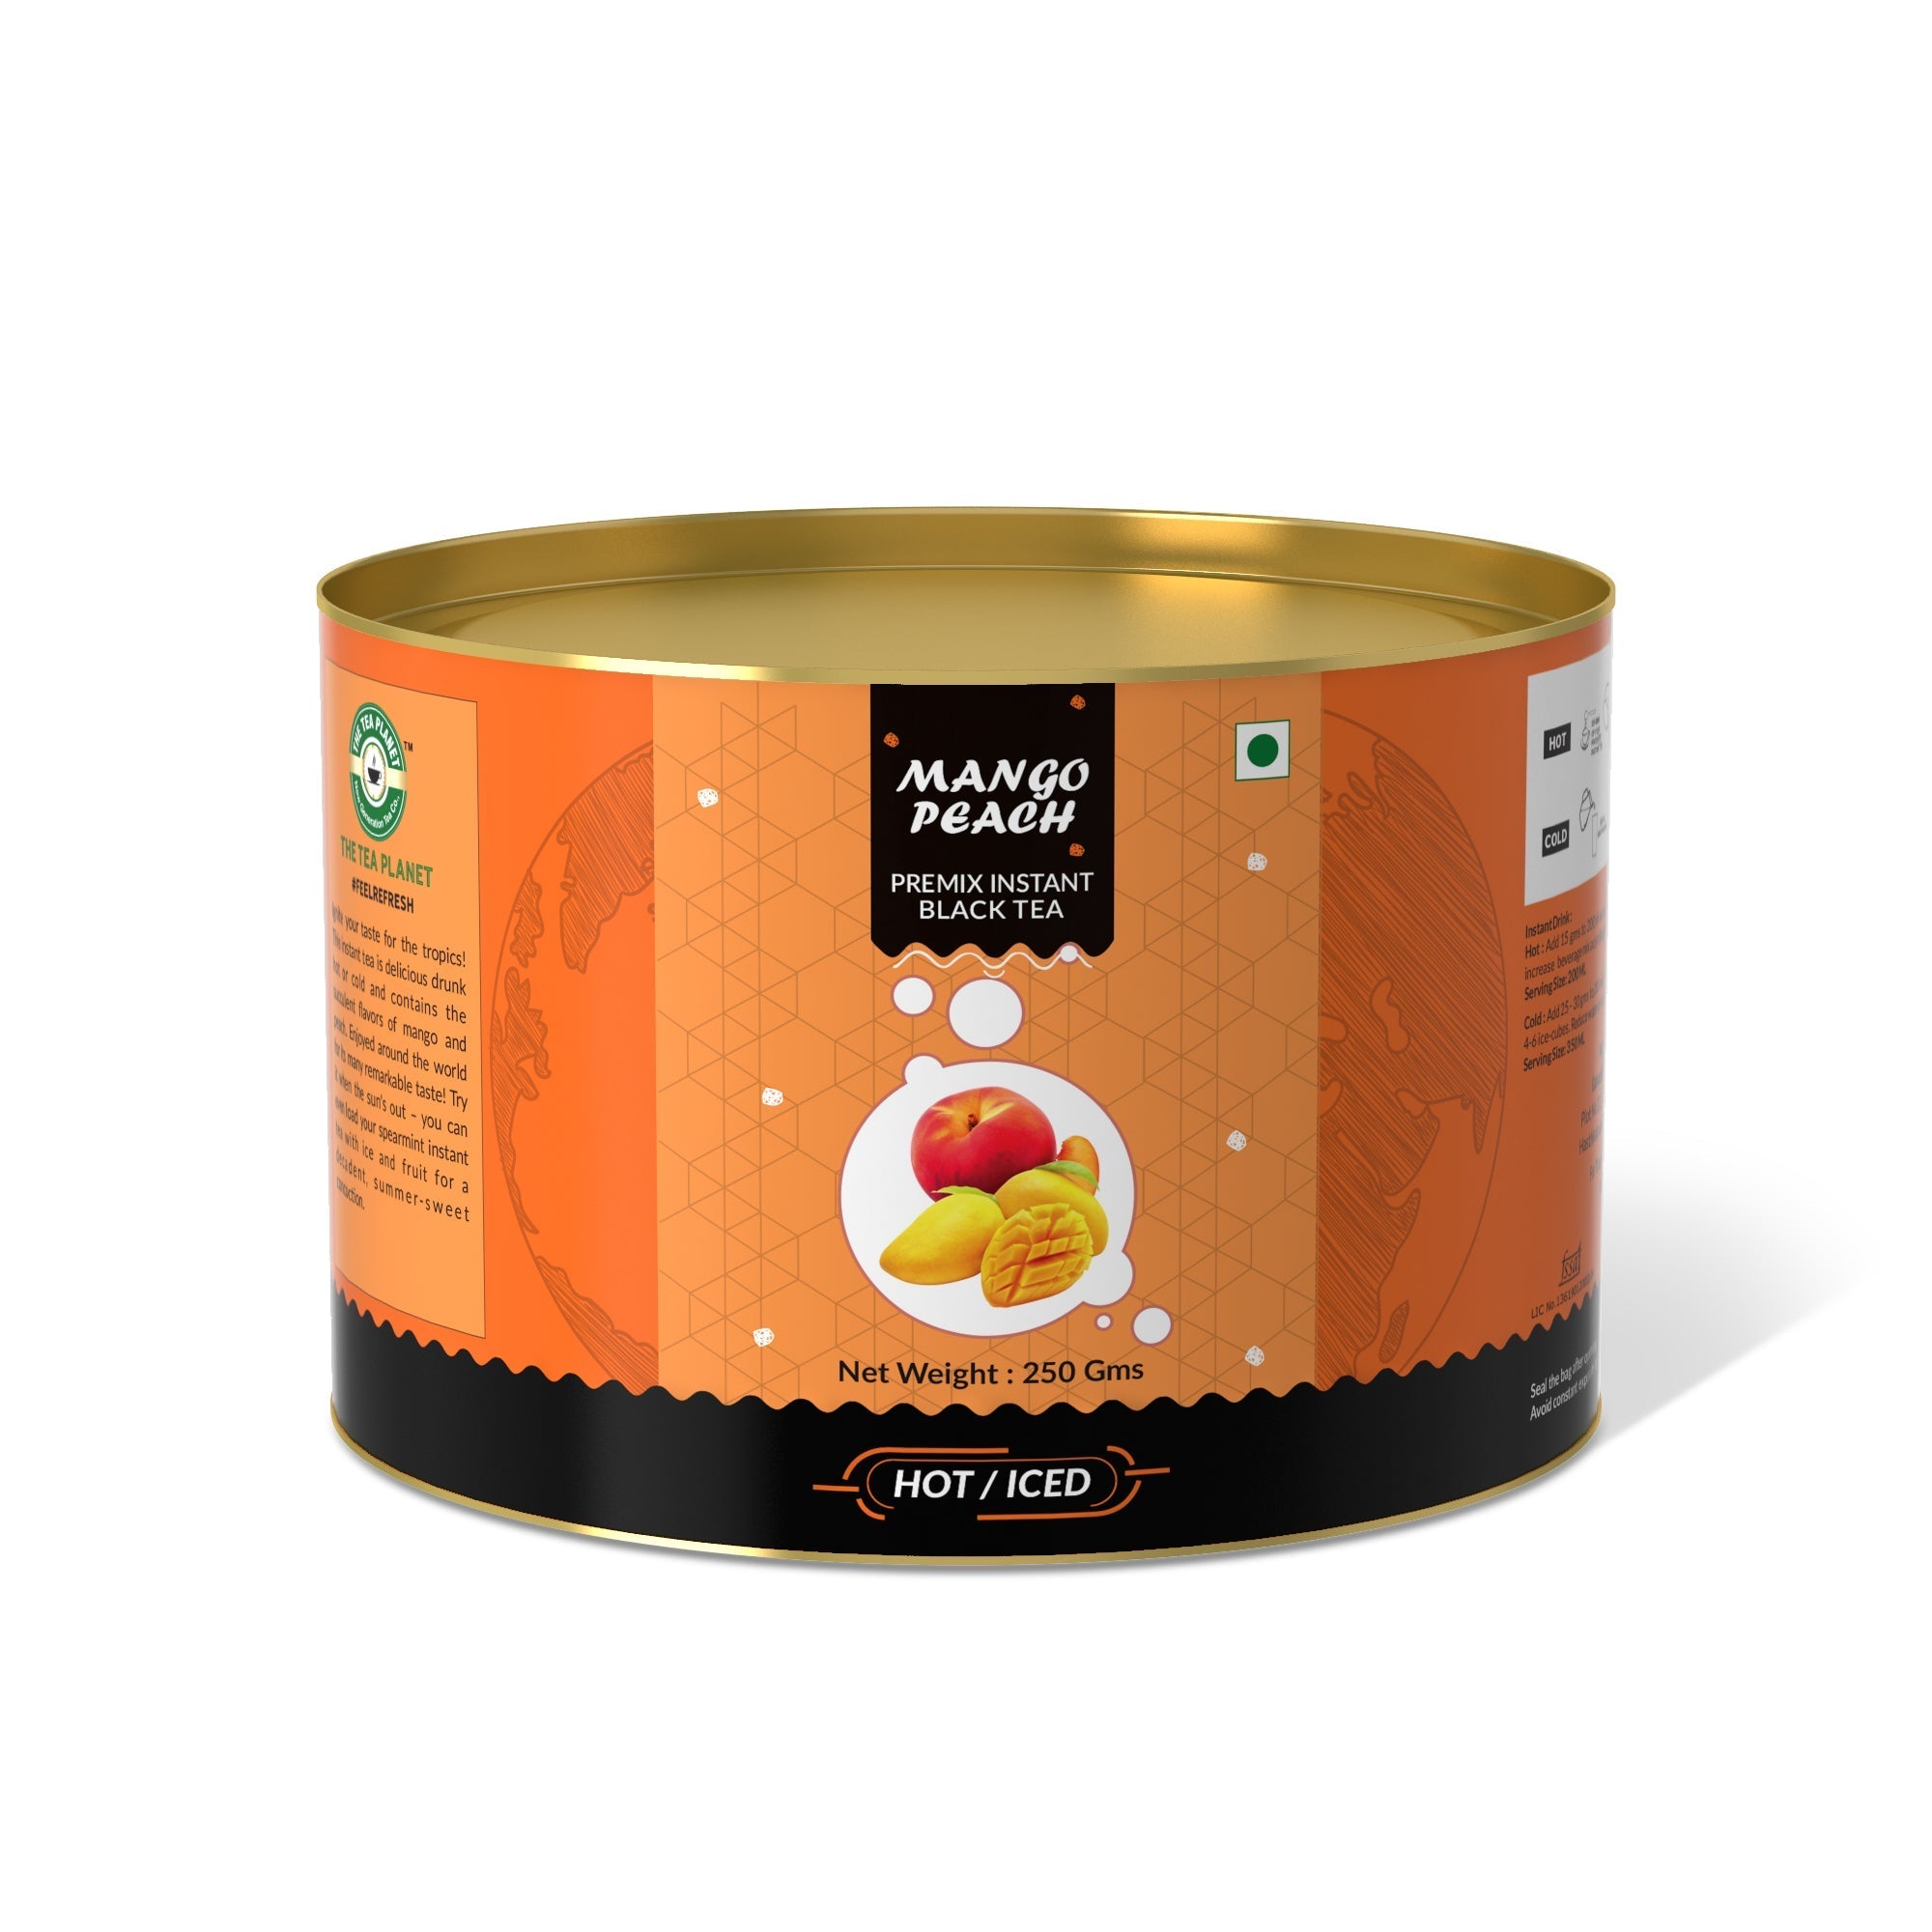 Mango & Peach Flavored Instant Black Tea - 800 gms